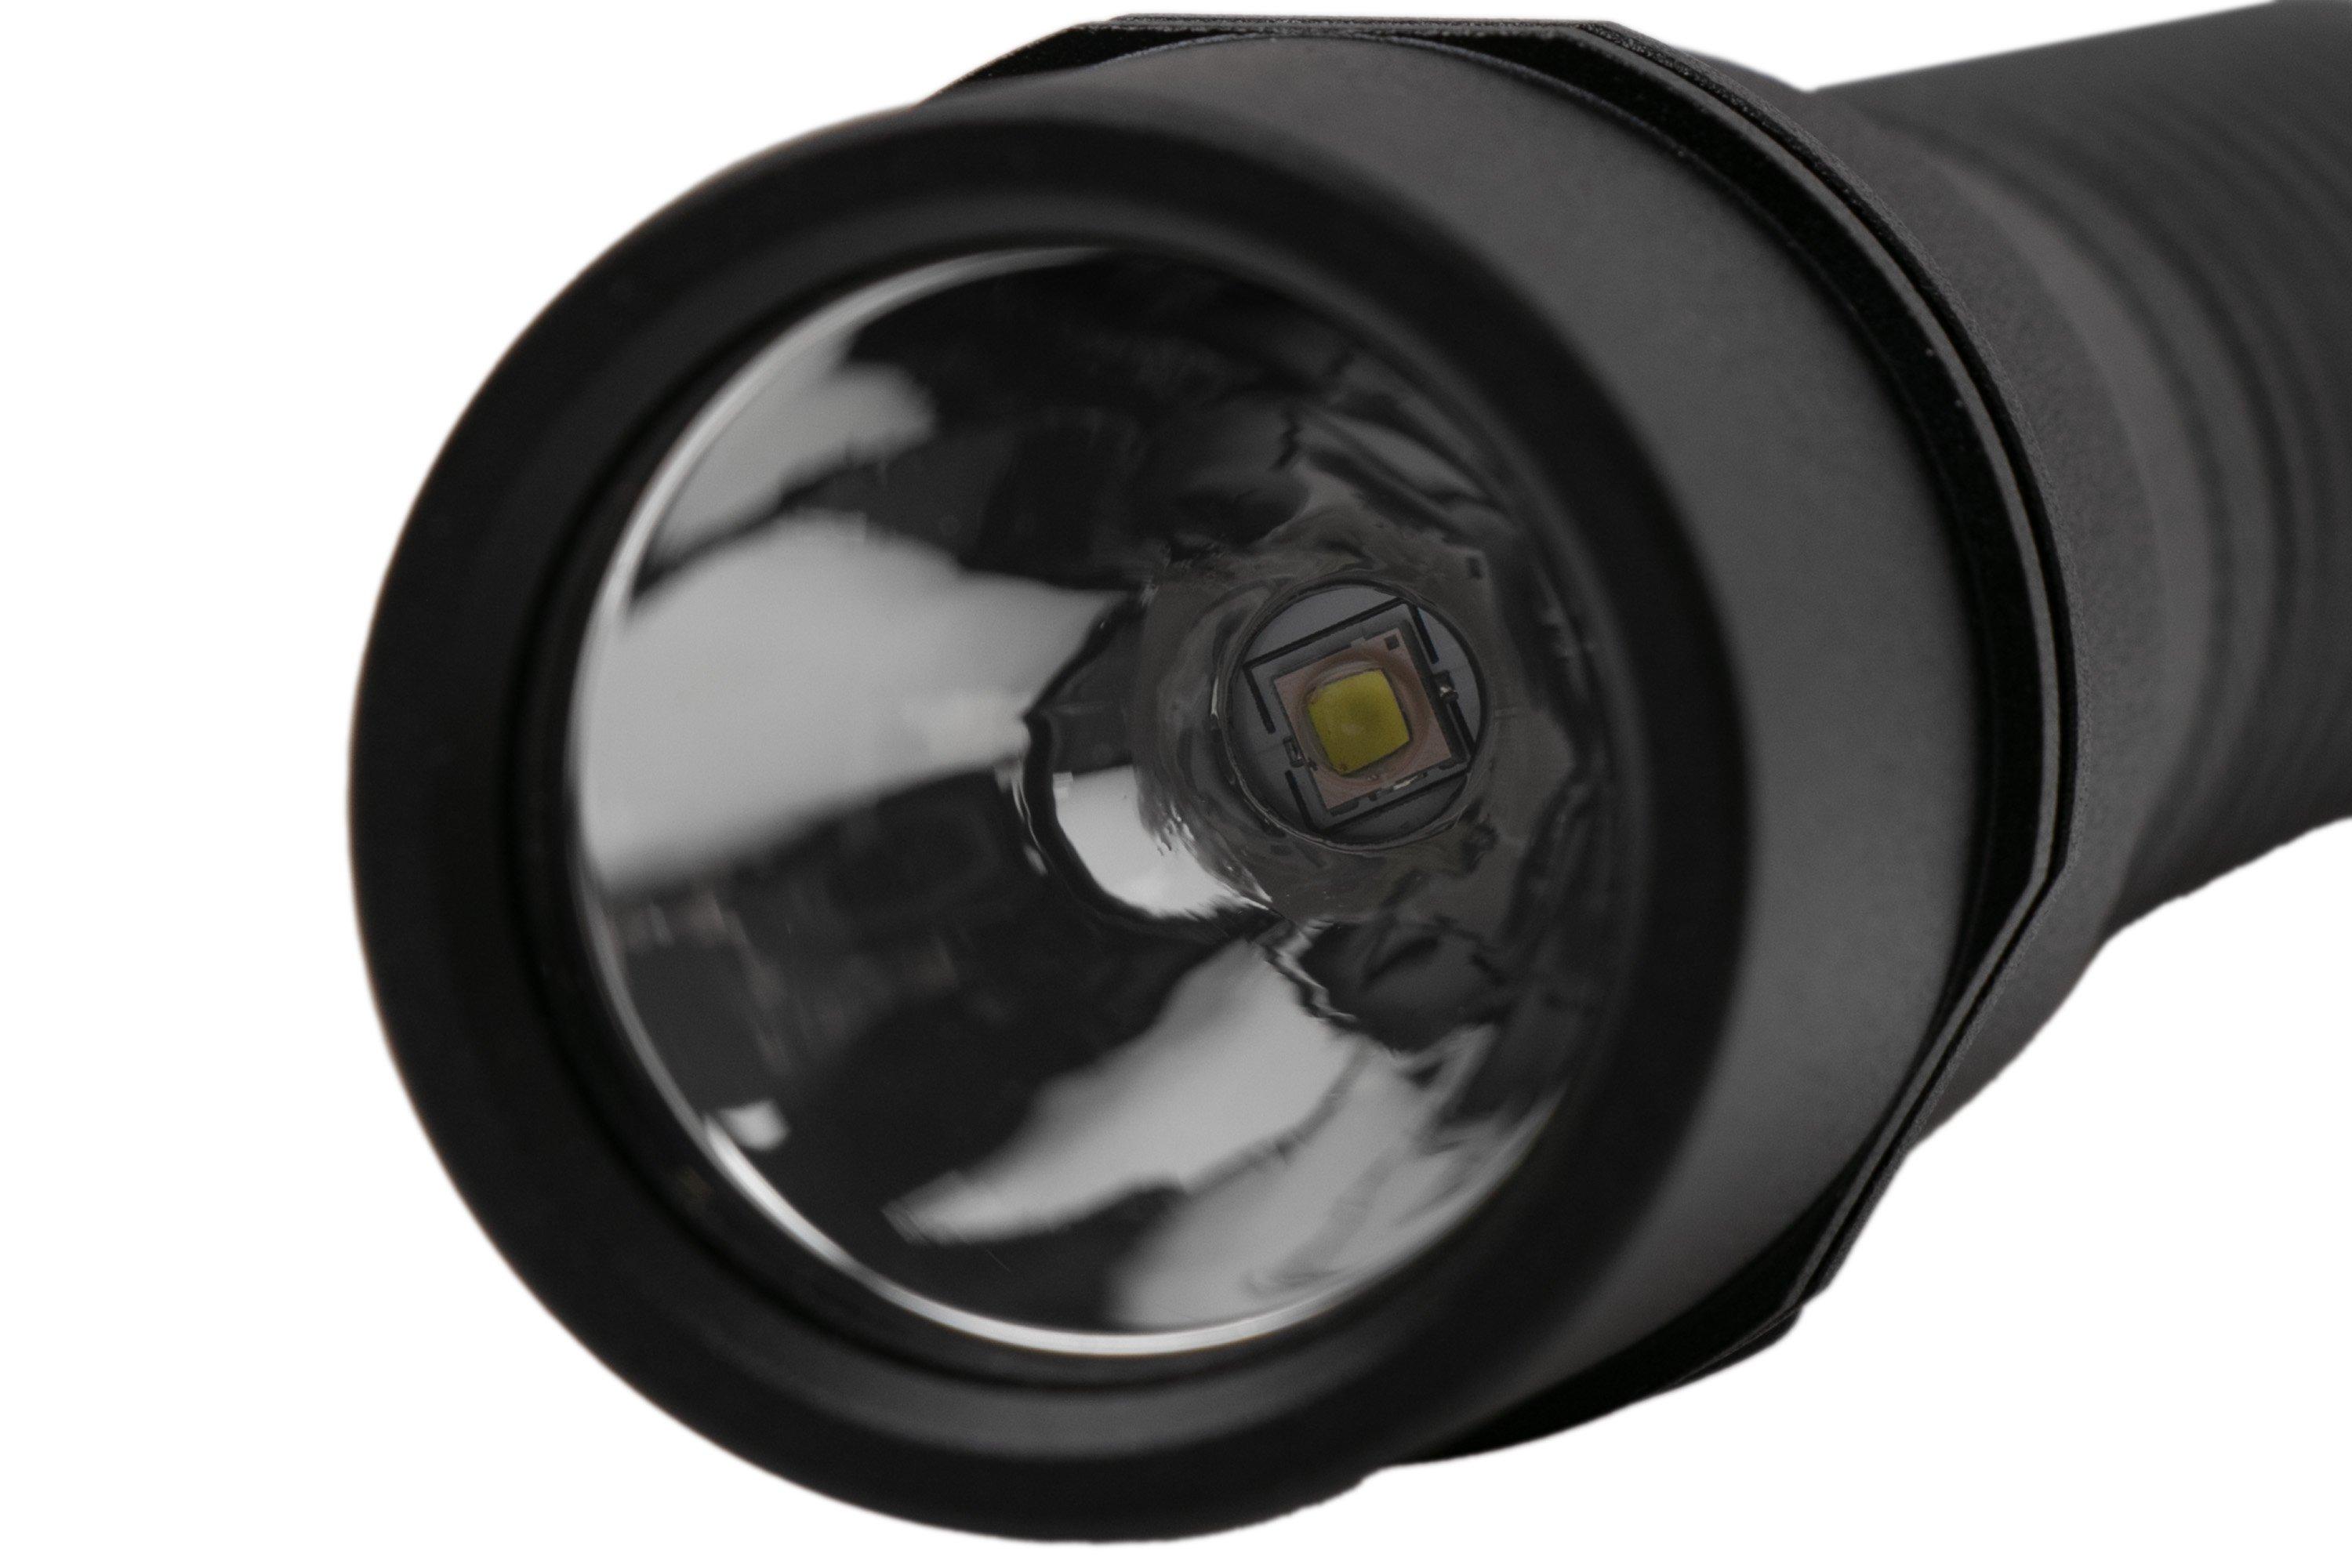 Streamlight Strion 74300 rechargeable flashlight, 375 lumens